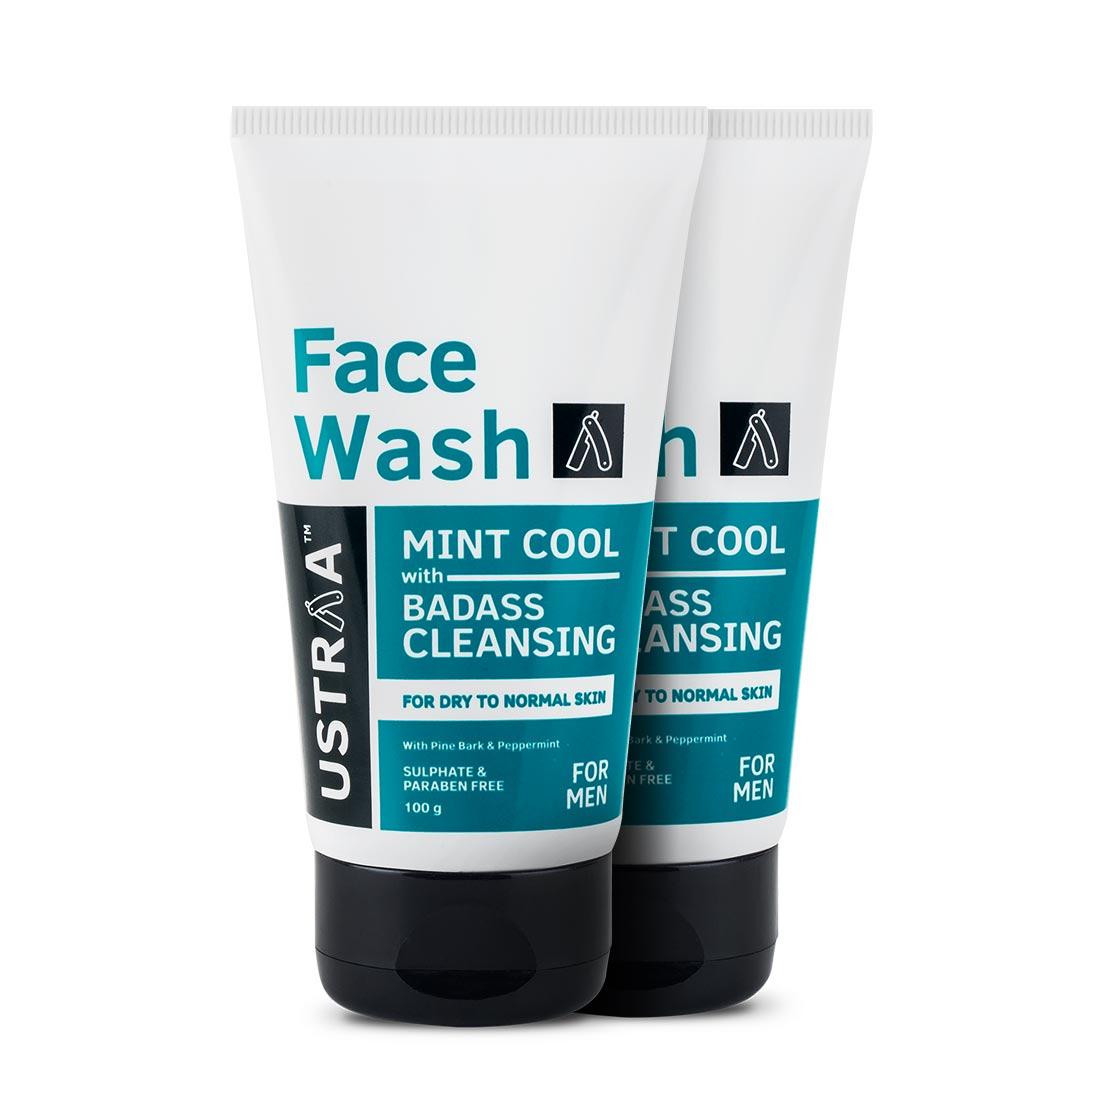 Face Wash dry skin 100g - Set of 2